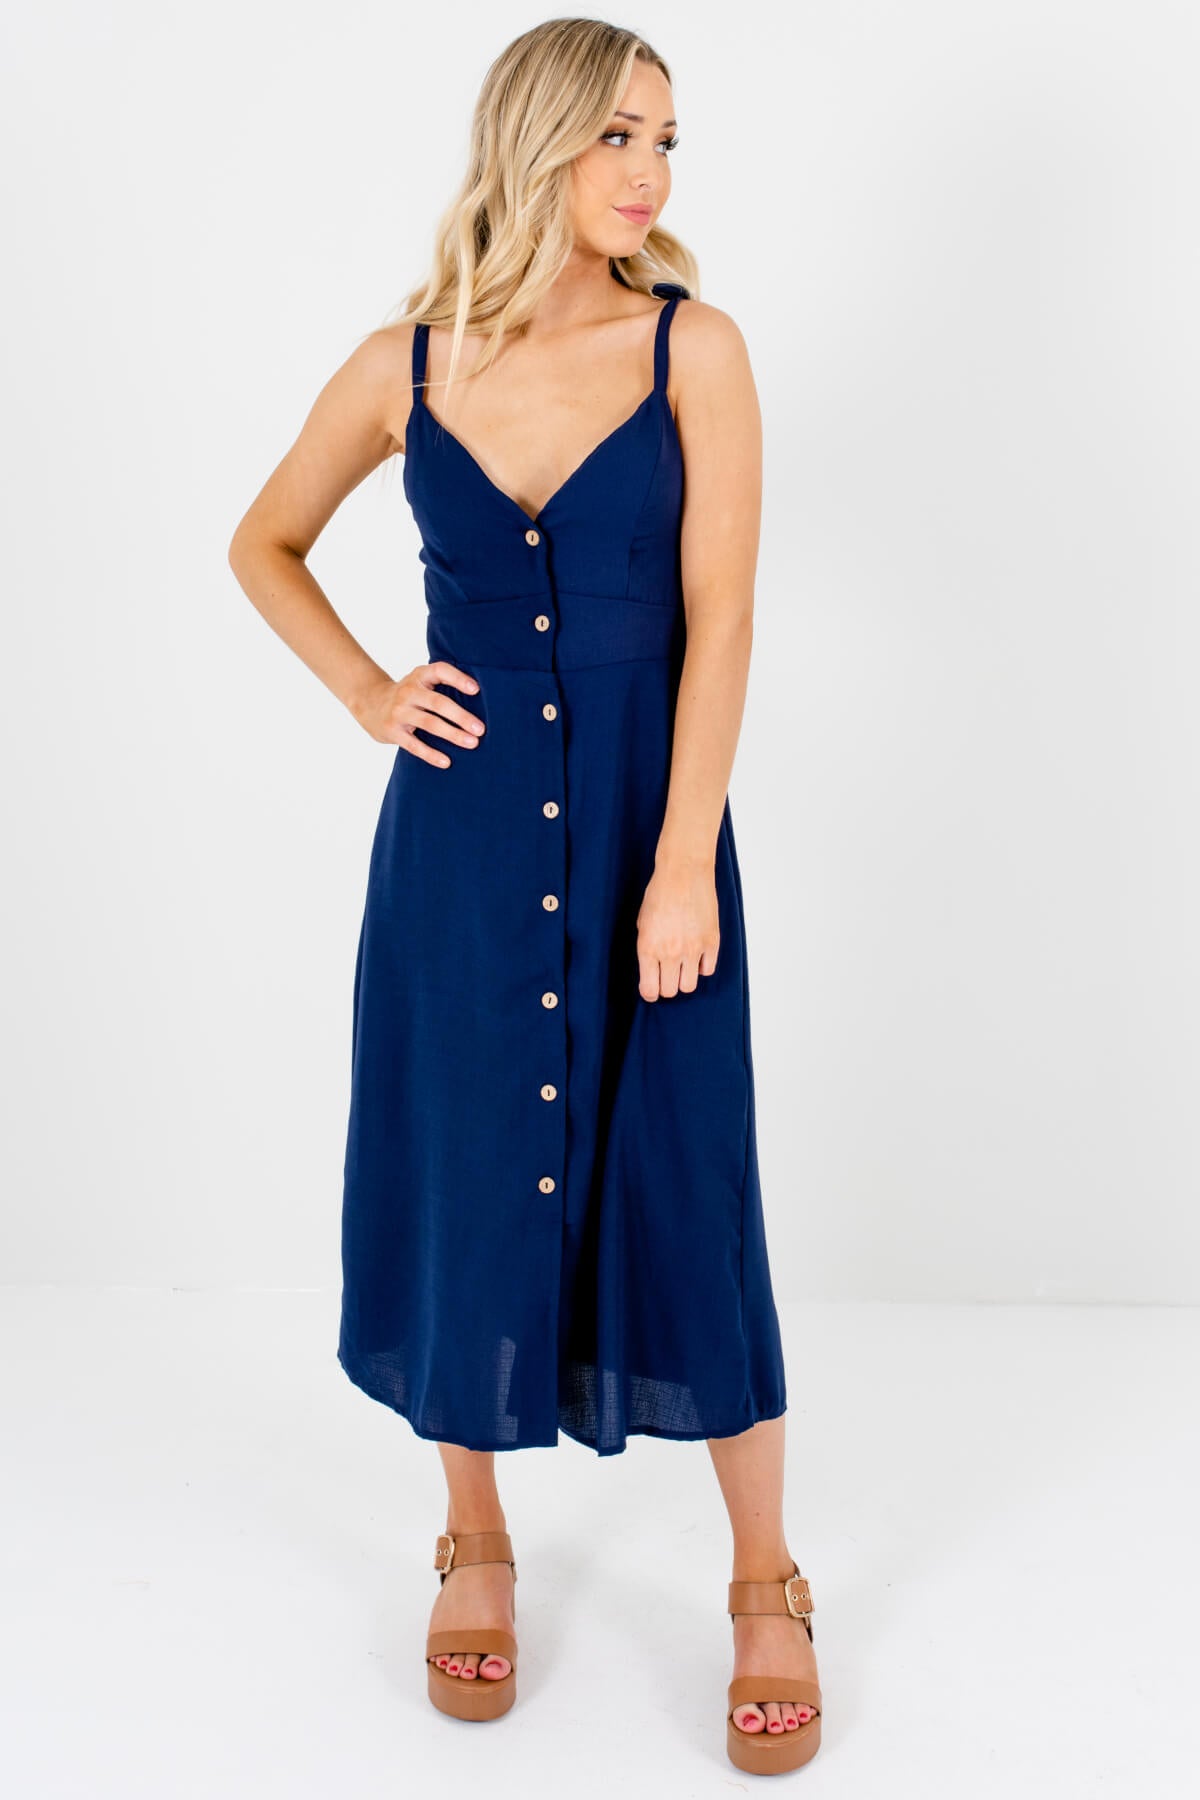 Break Away Navy Midi Dress | Boutique Midi Dresses for Women - Bella ...